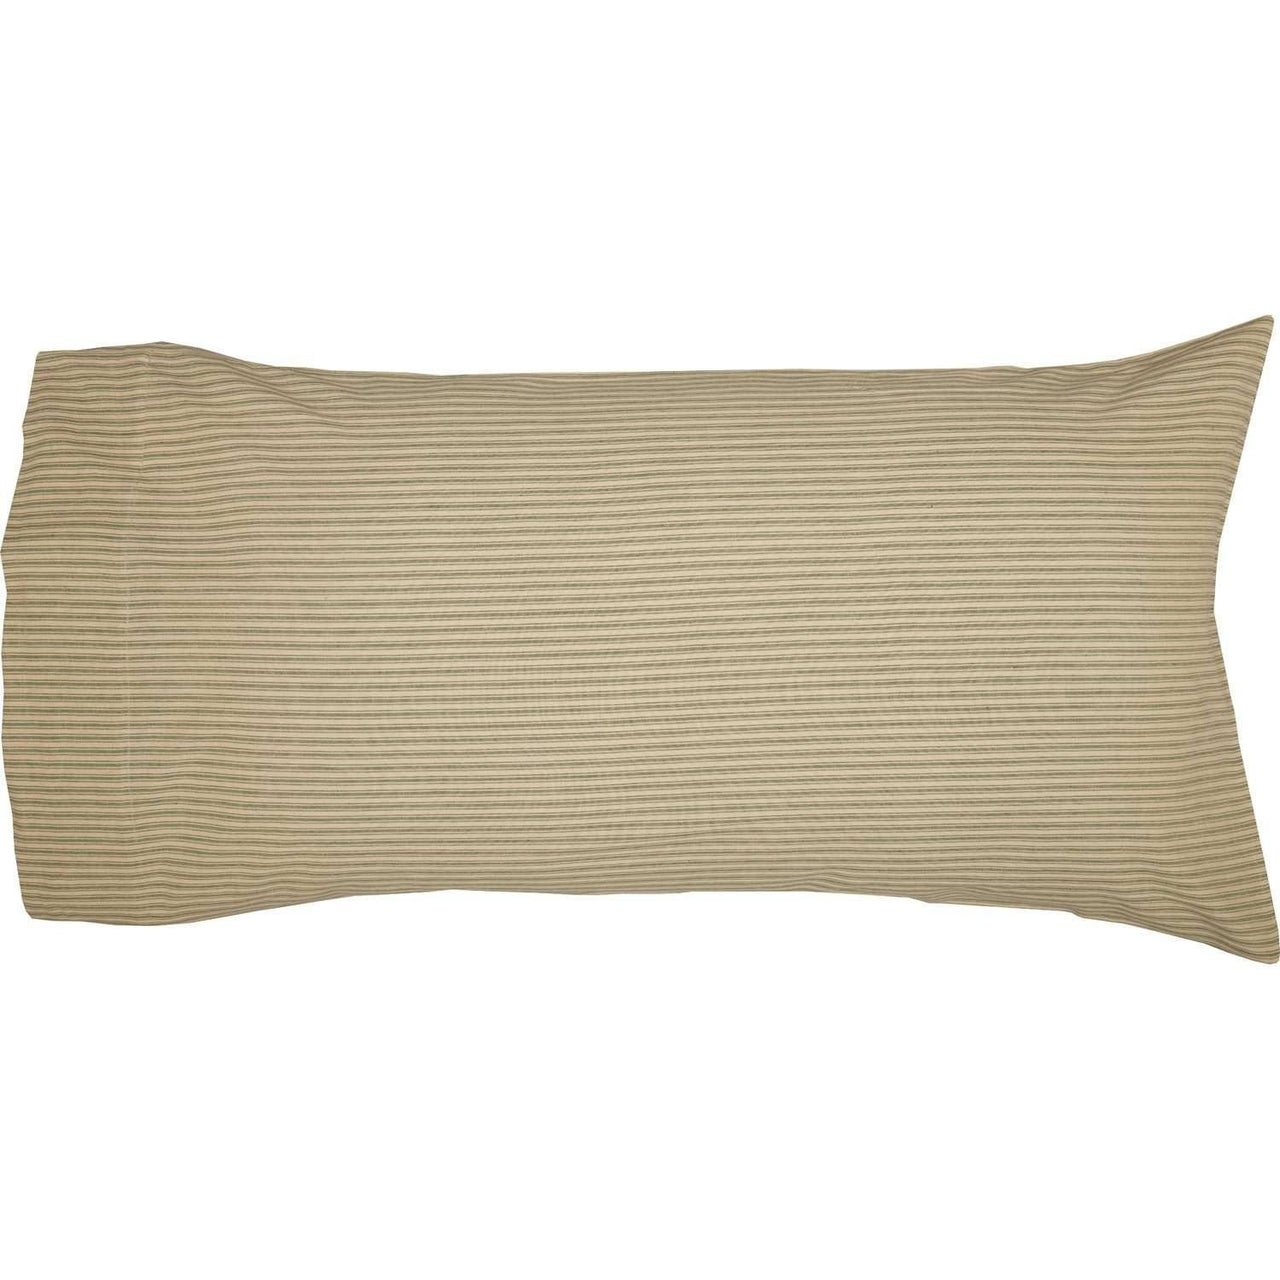 Prairie Winds Green Ticking Stripe King Pillow Case Set of 2 21x40 VHC Brands - The Fox Decor